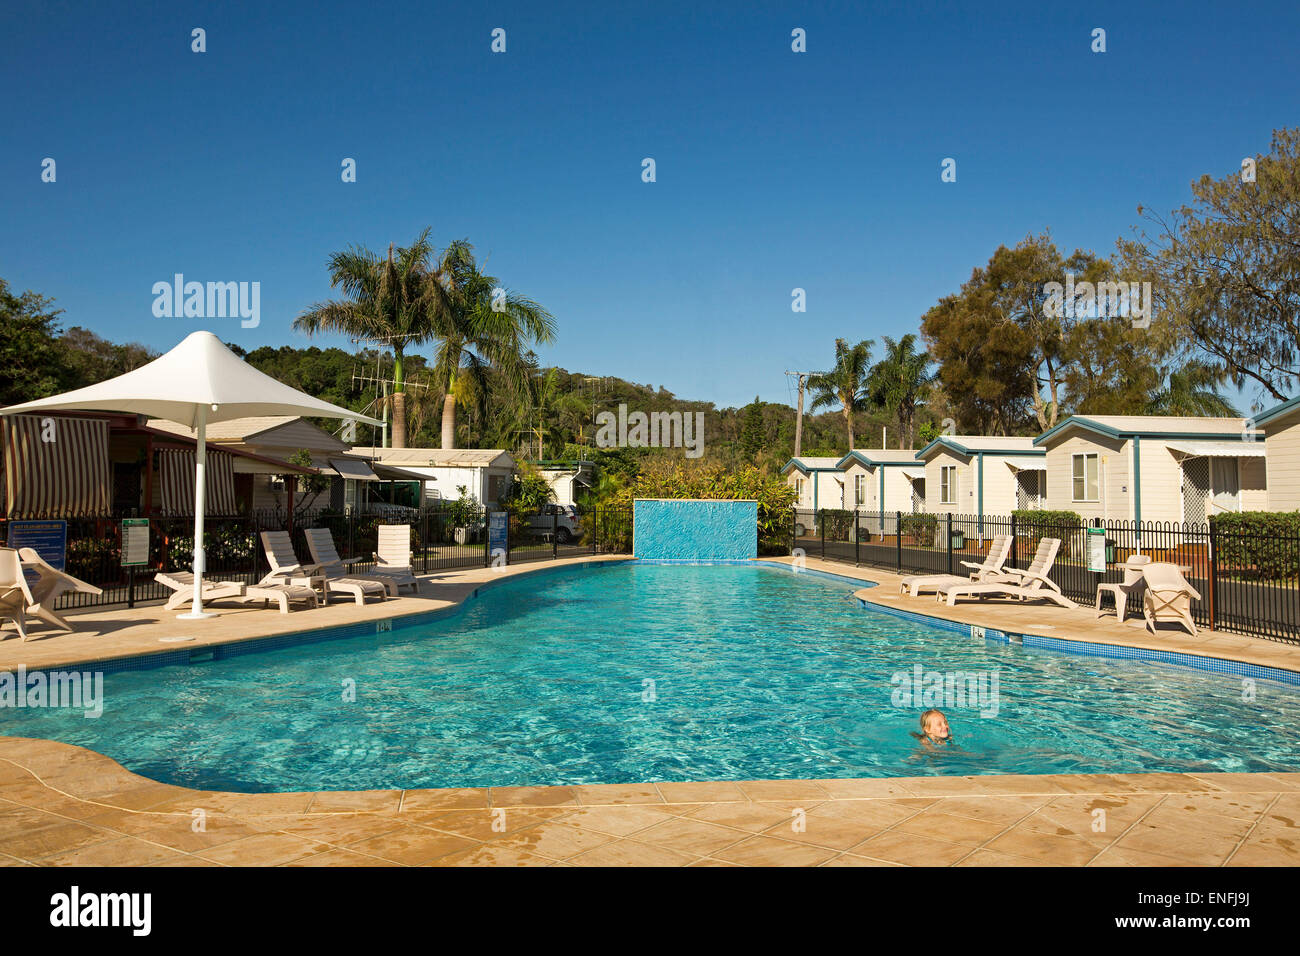 Swimming pool and tourist holiday accommodation under blue sky at Nambucca Heads NSW Australia Stock Photo